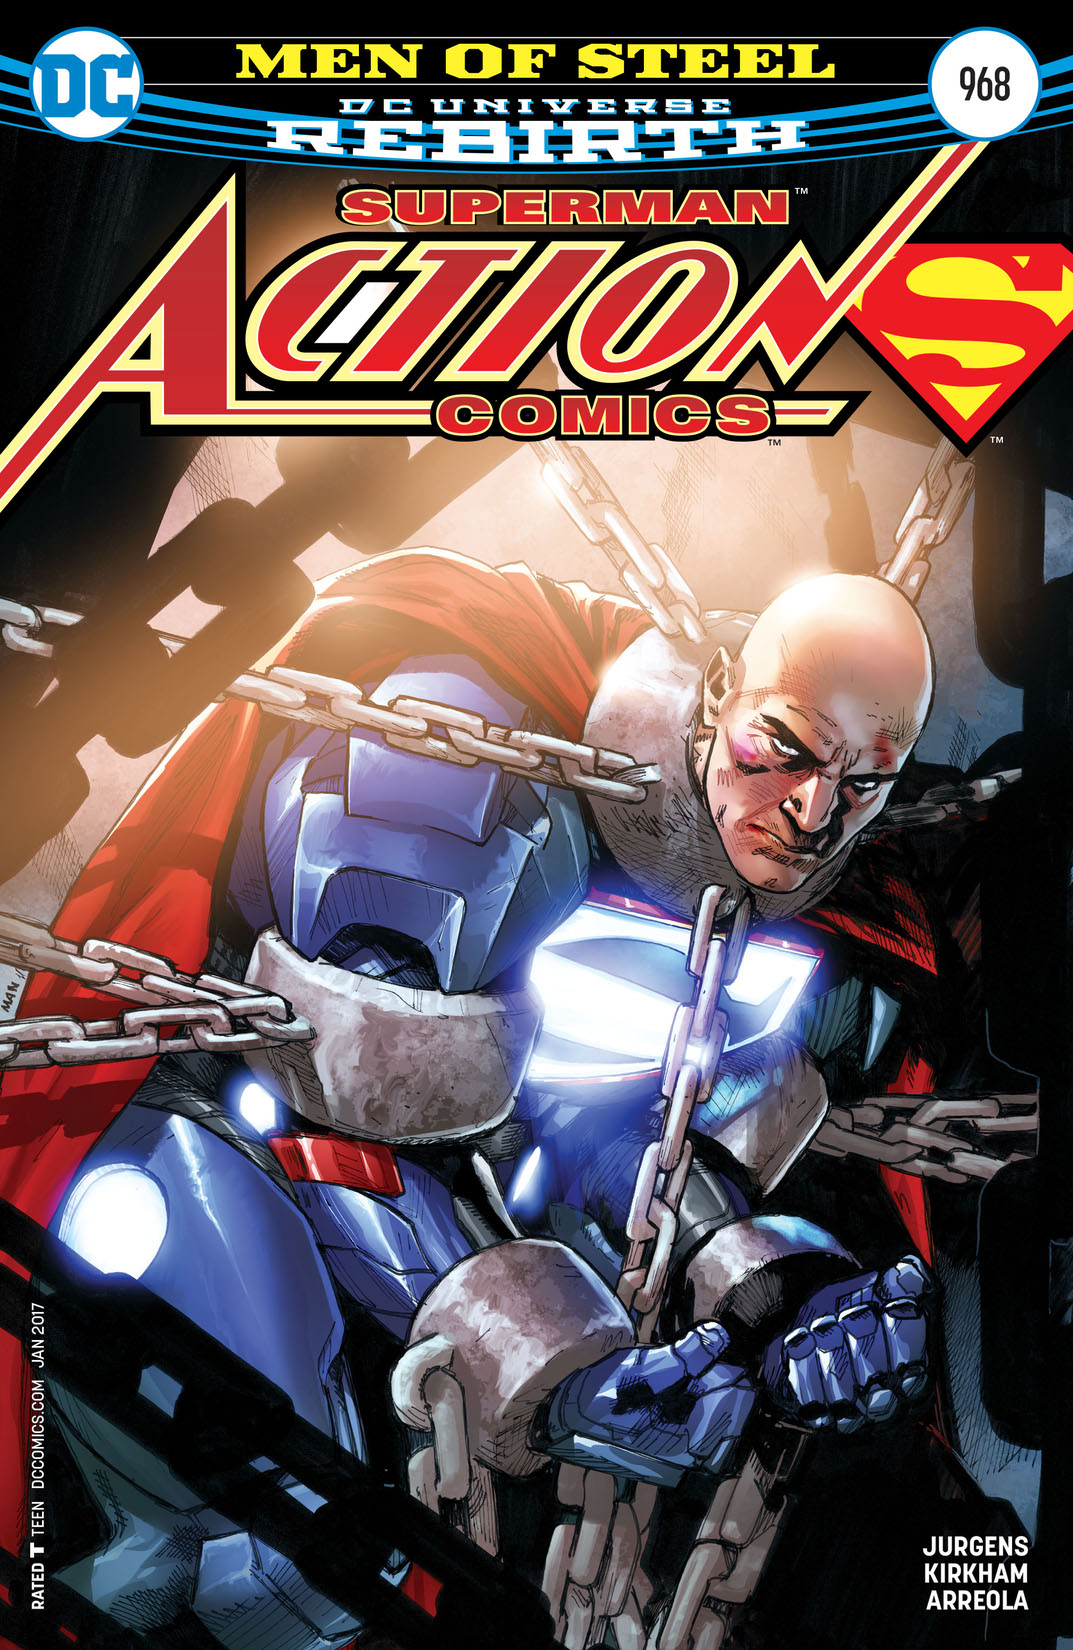 Action Comics (2016-) #968 preview images